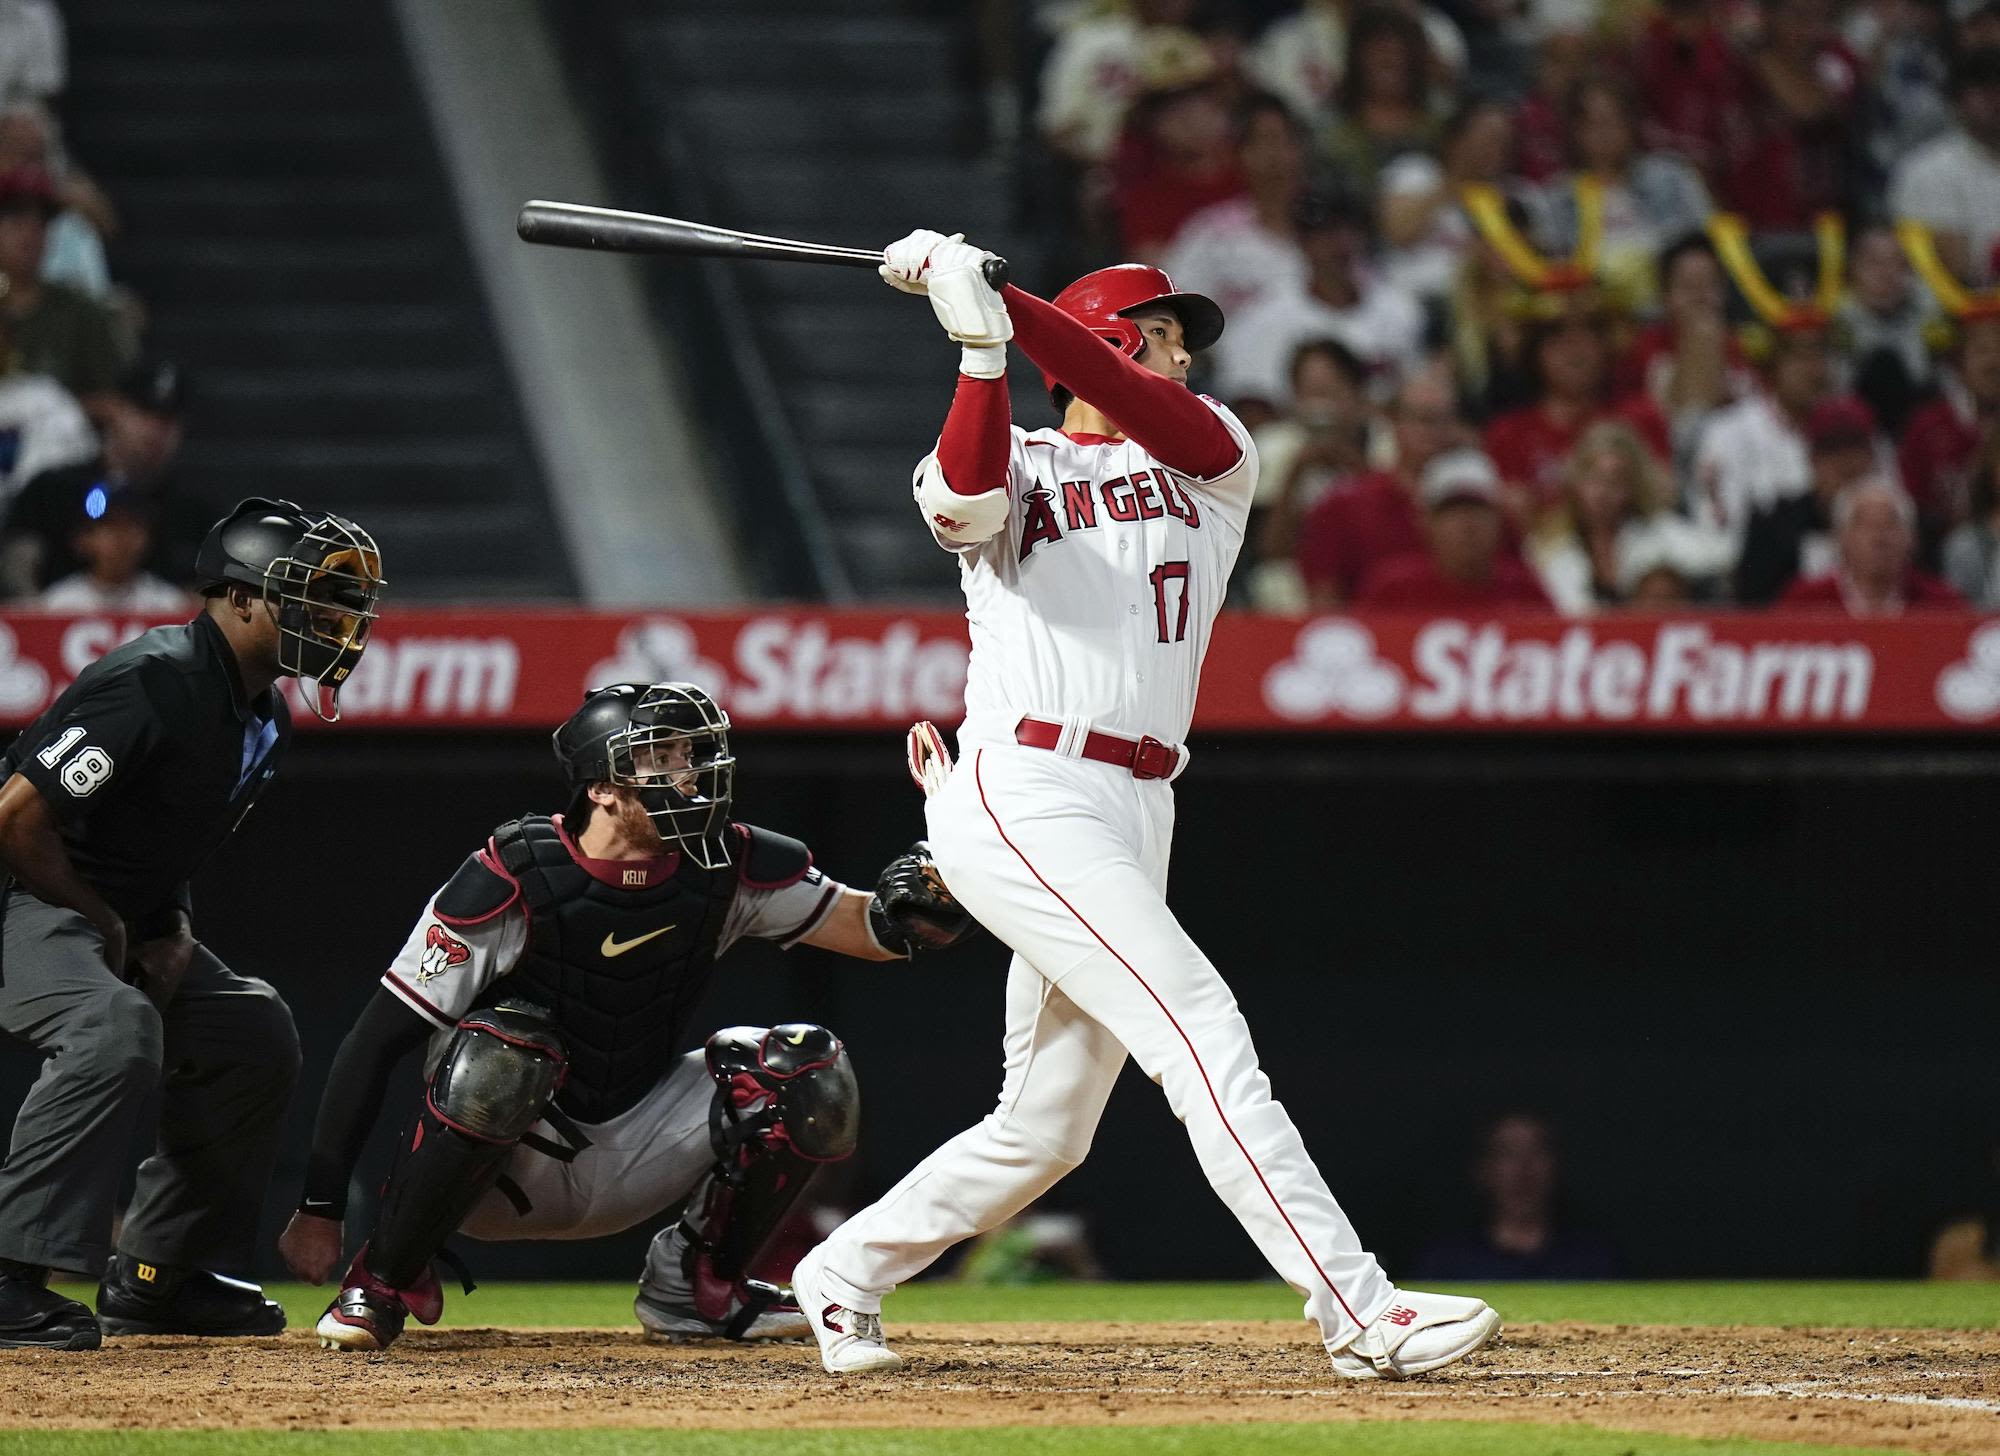 Ohtani hits the longest home run of his MLB career (493 feet) to reach 30  this season